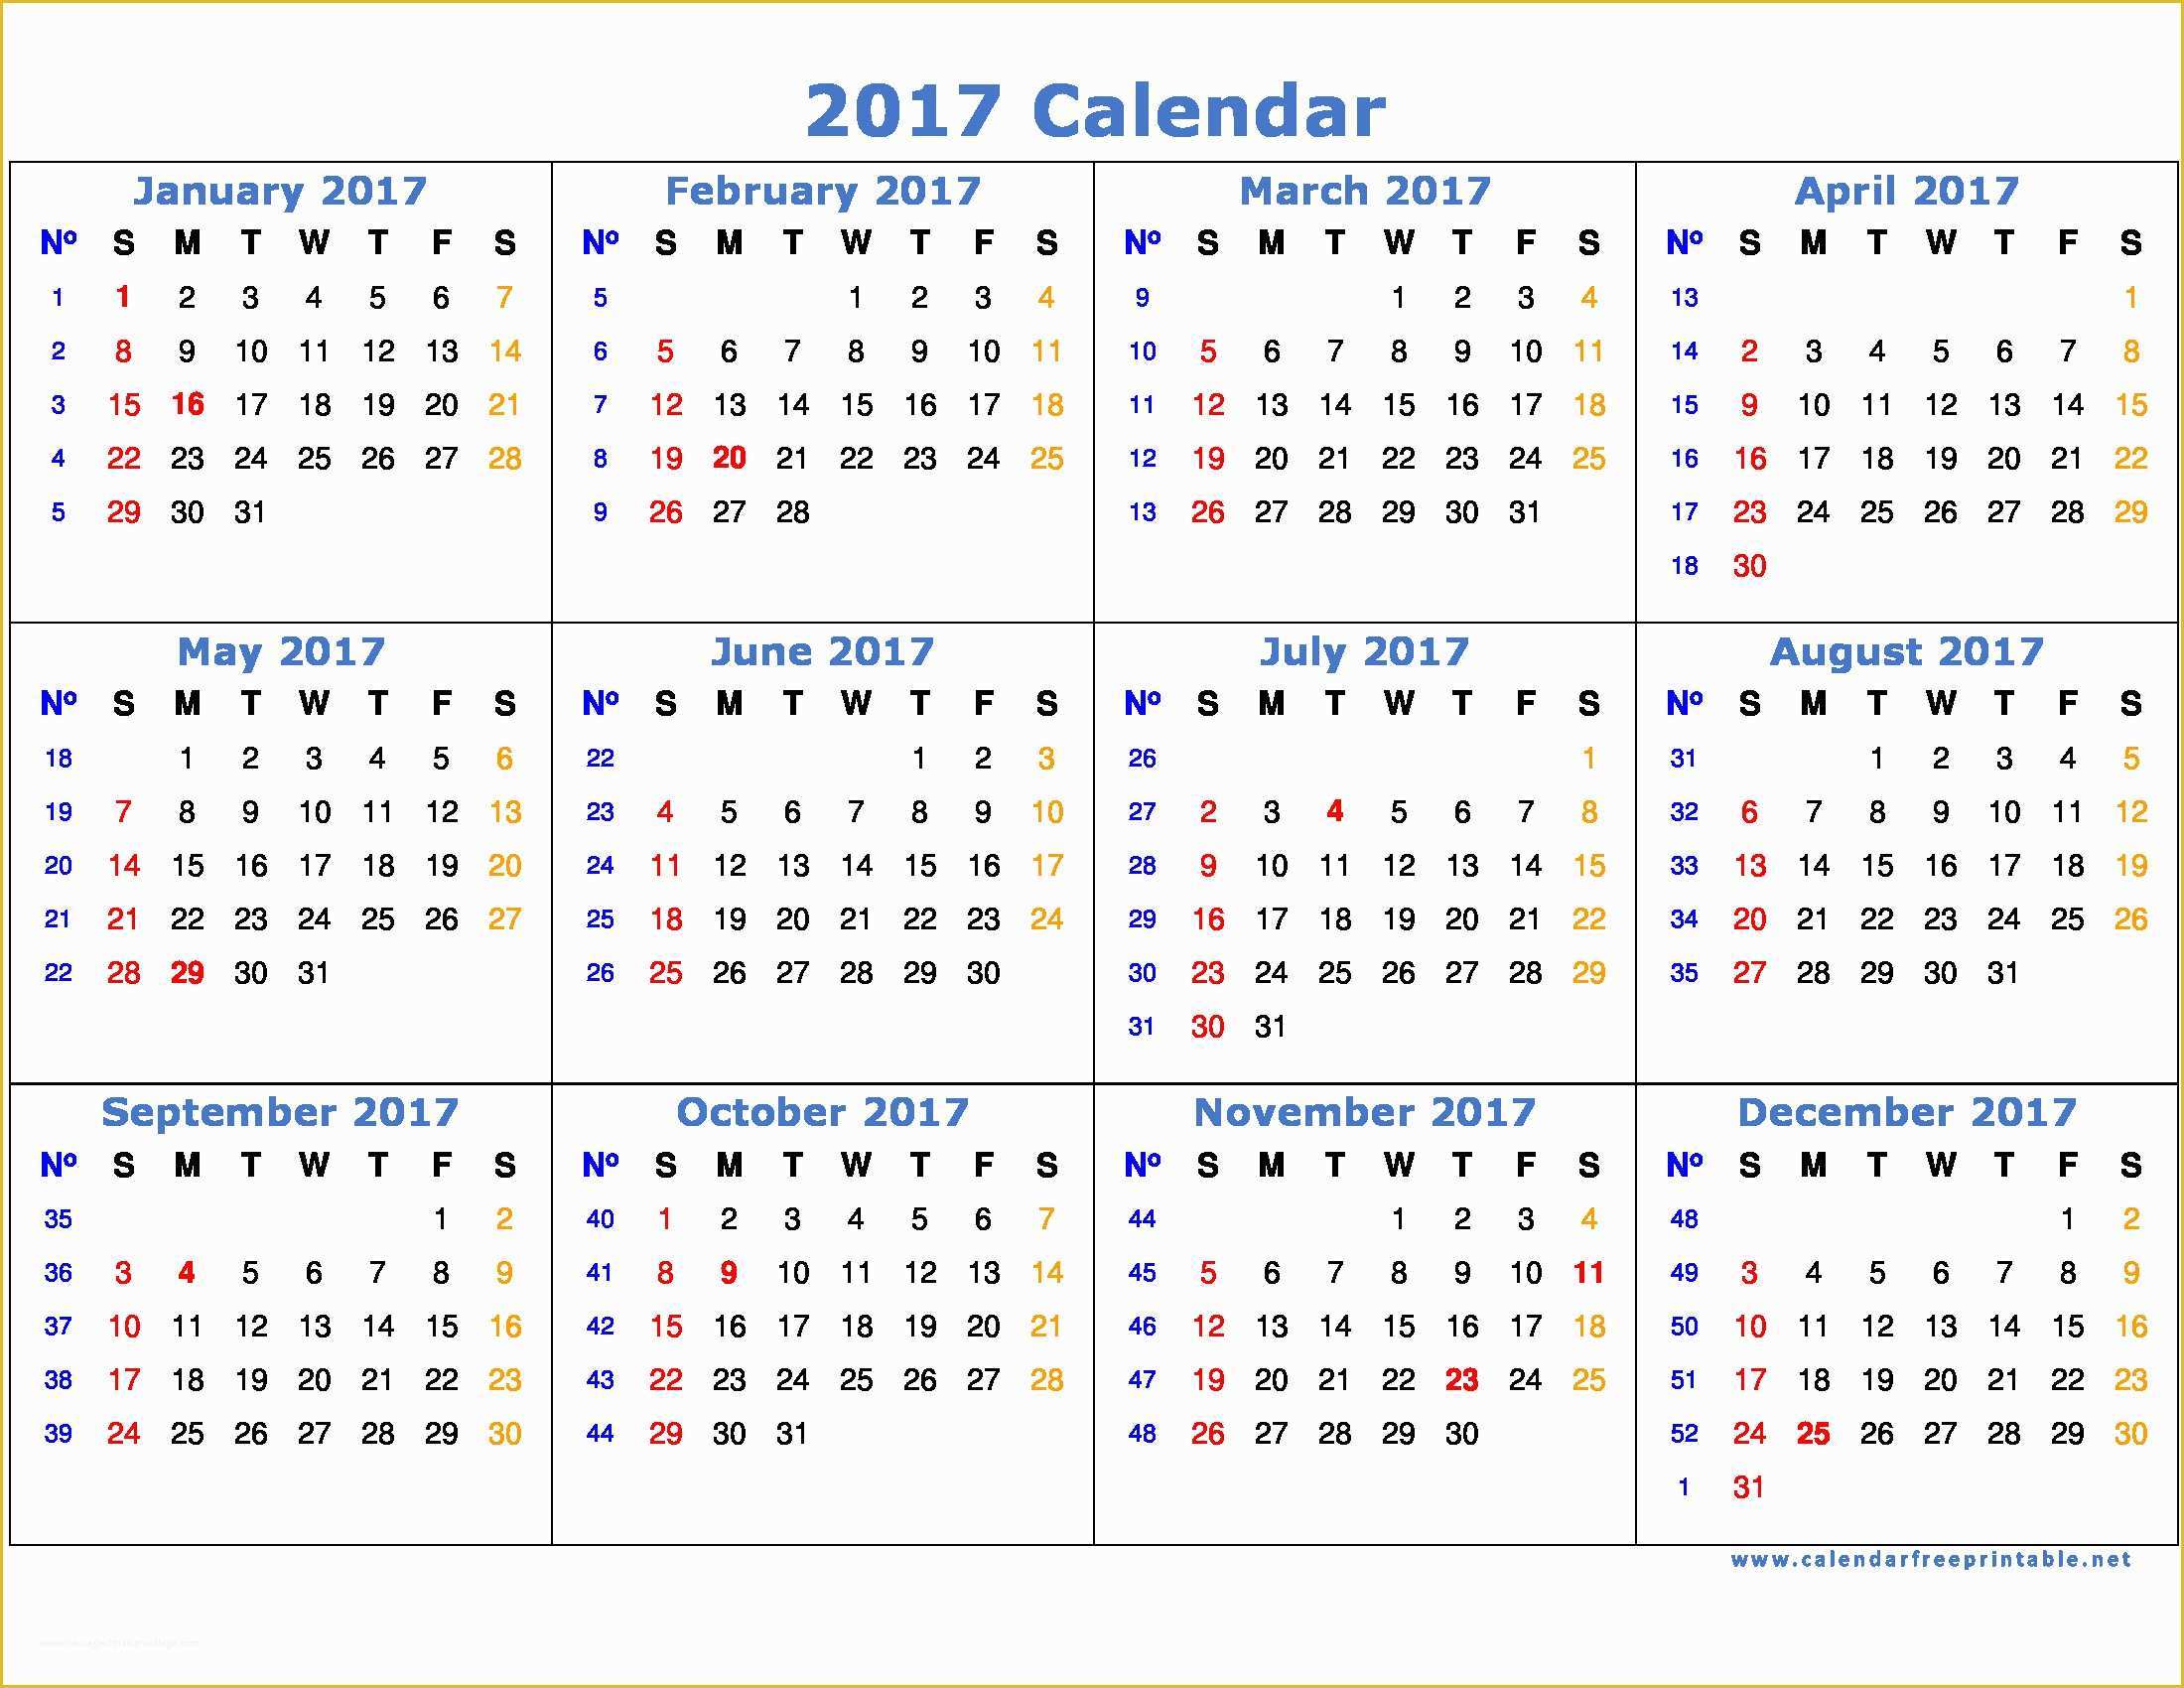 Free Calendar Template 2017 Of 2017 Calendar Printable with Holidays